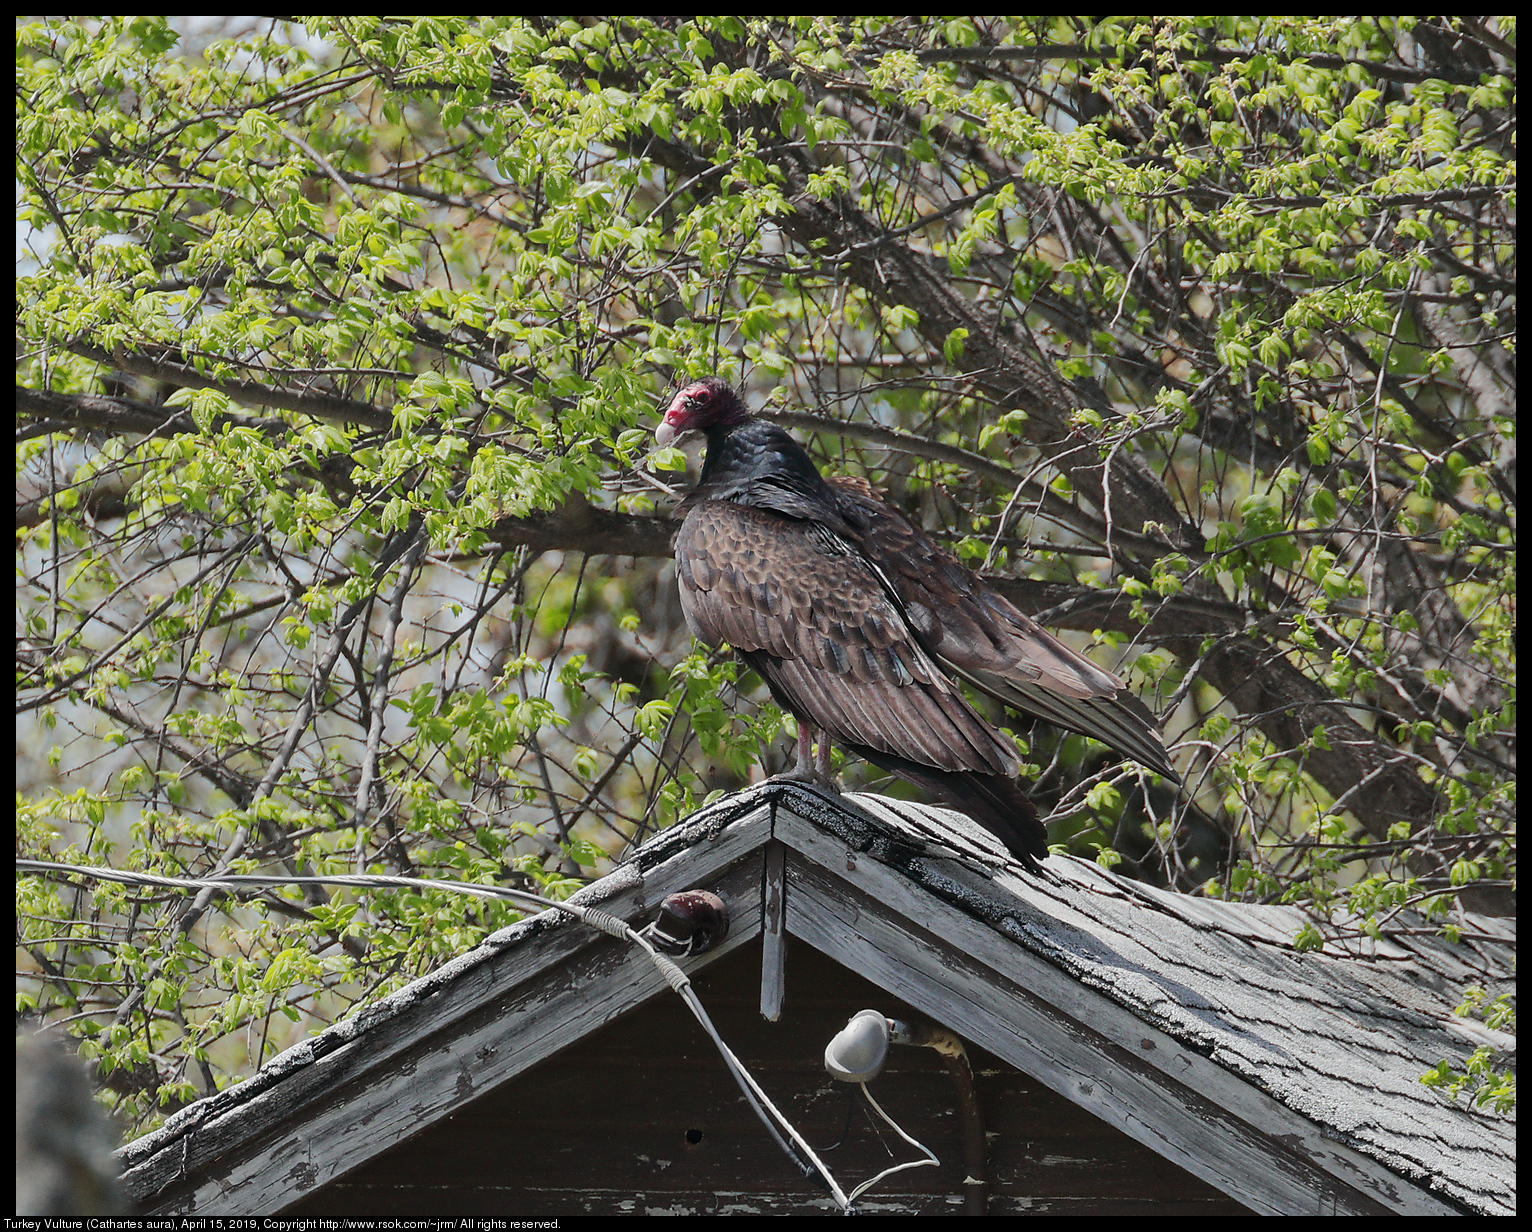 Turkey Vulture (Cathartes aura), April 15, 2019